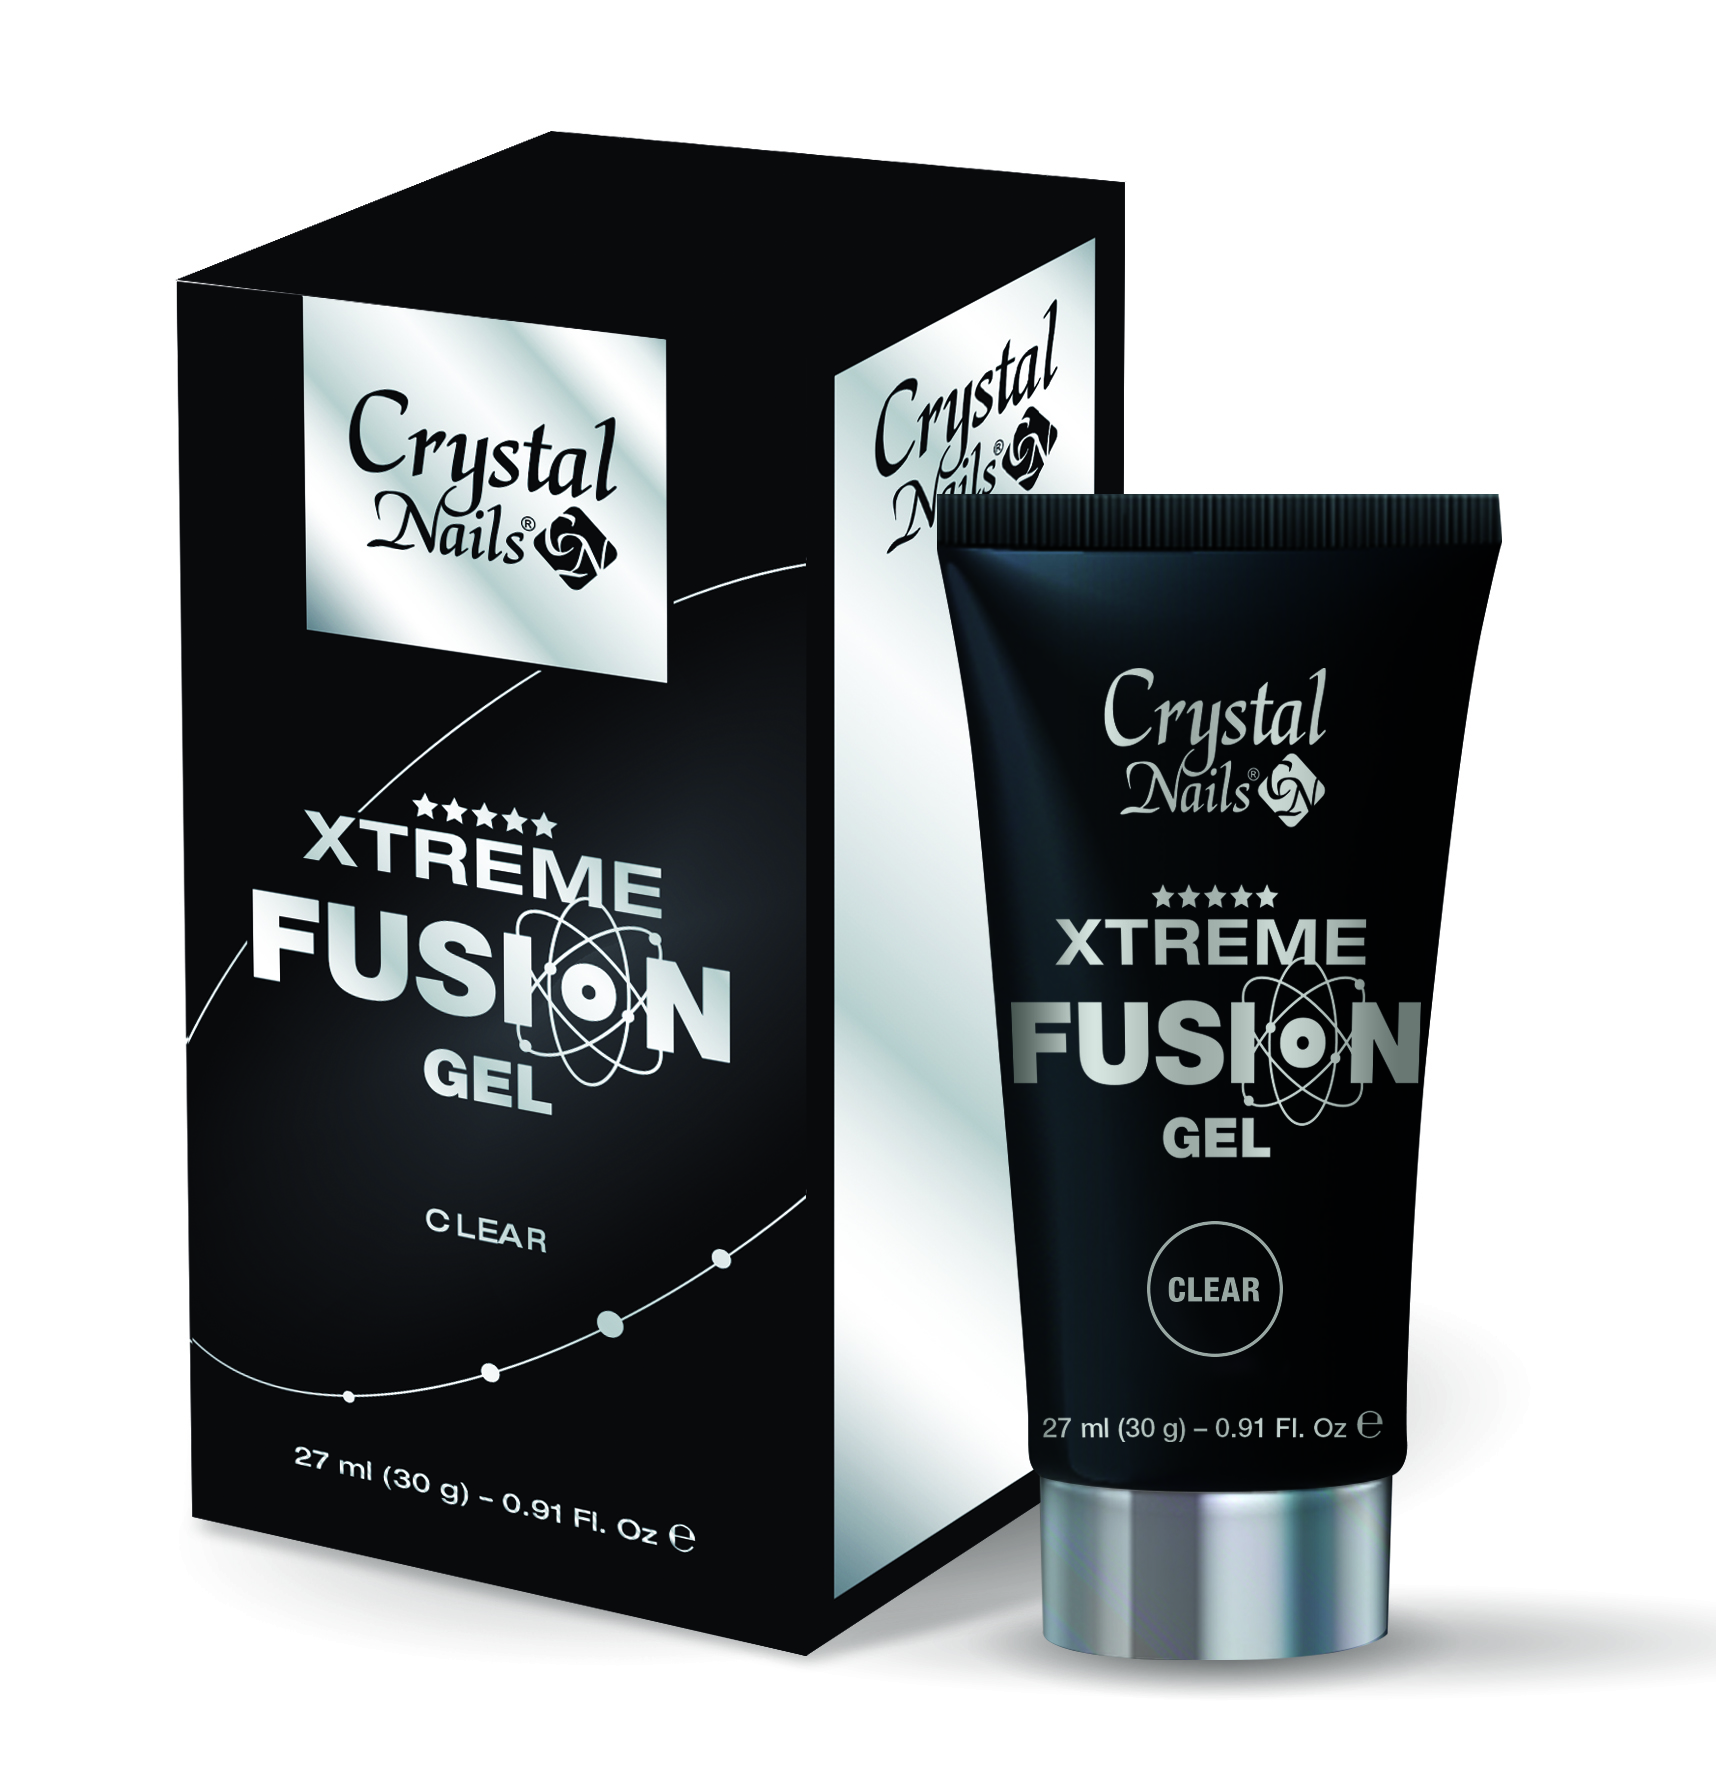 Crystal Nails - Xtreme Fusion AcrylGel Clear - 30g